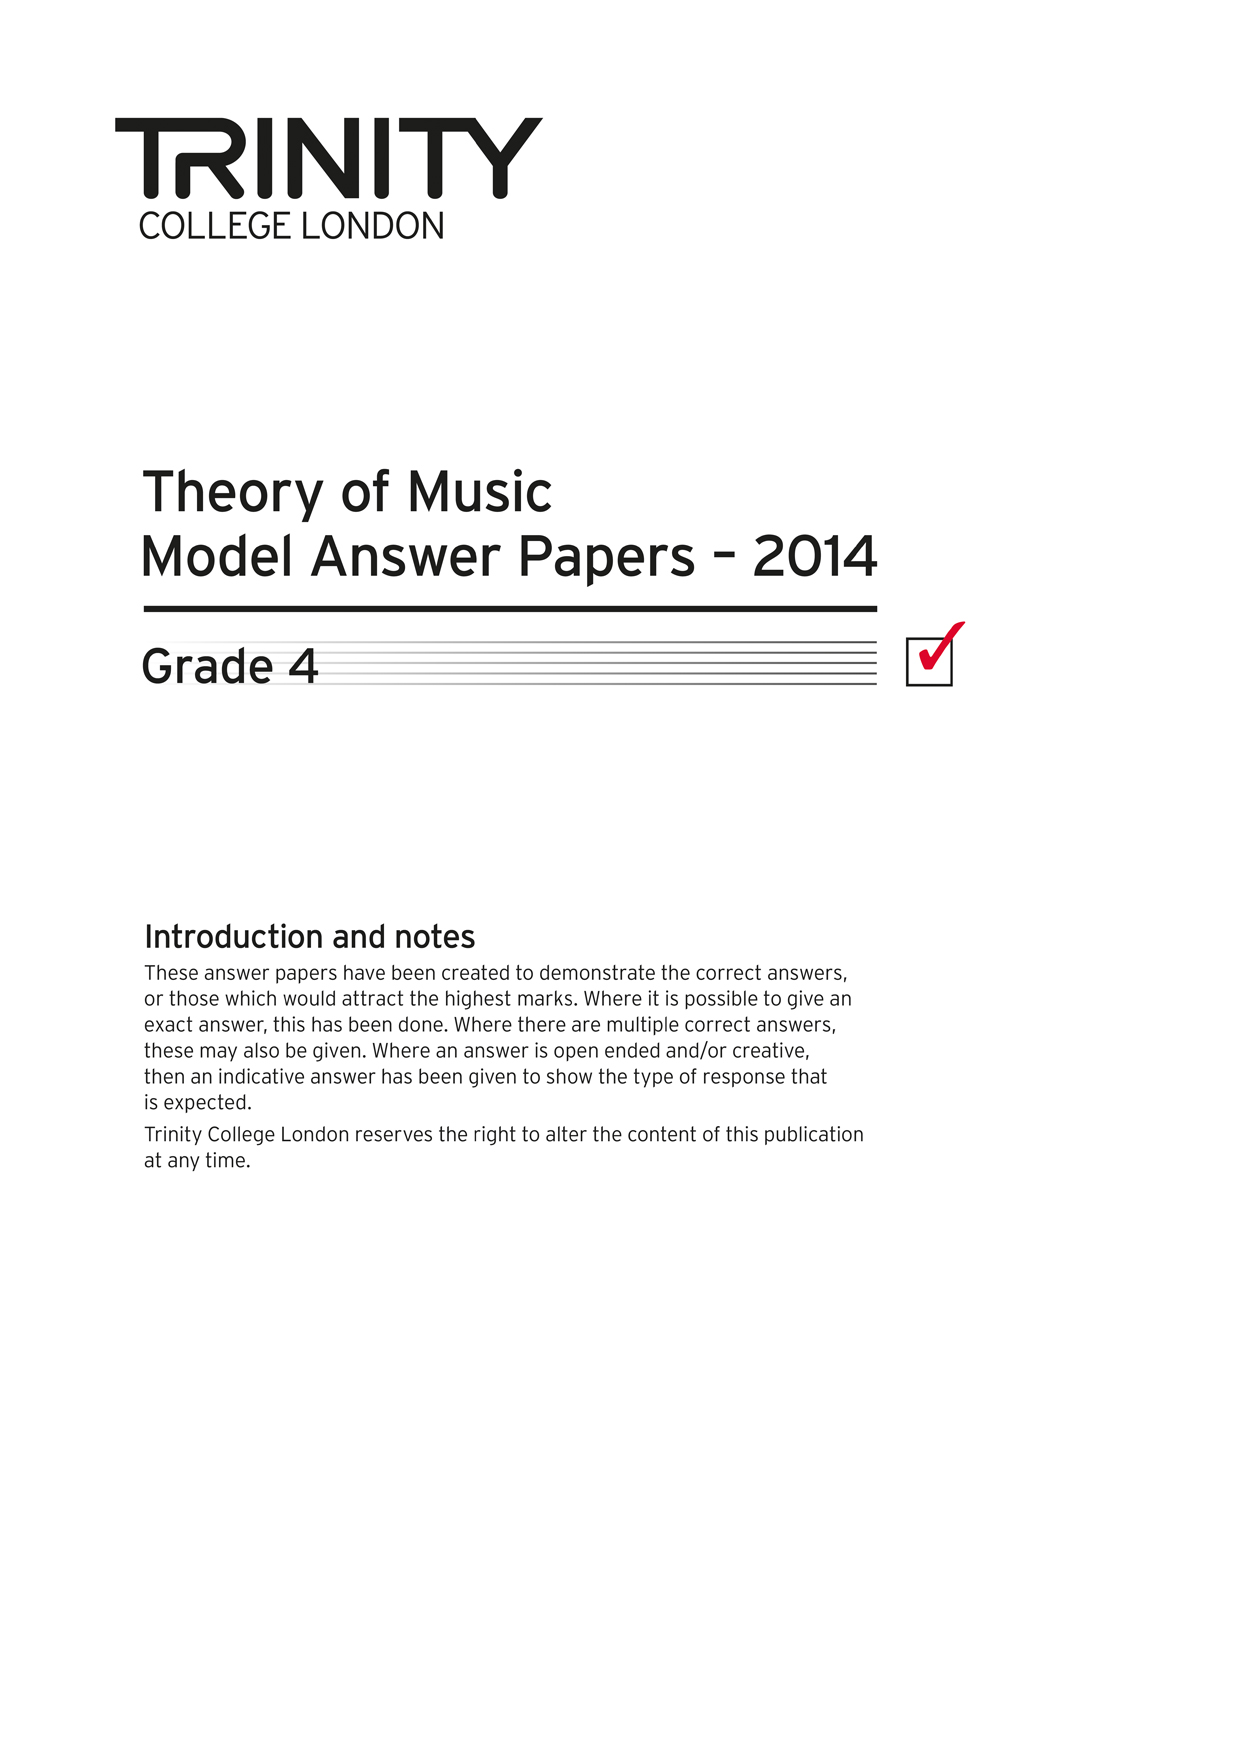 Theory Model Answers 2014 - Grade 4: Theory